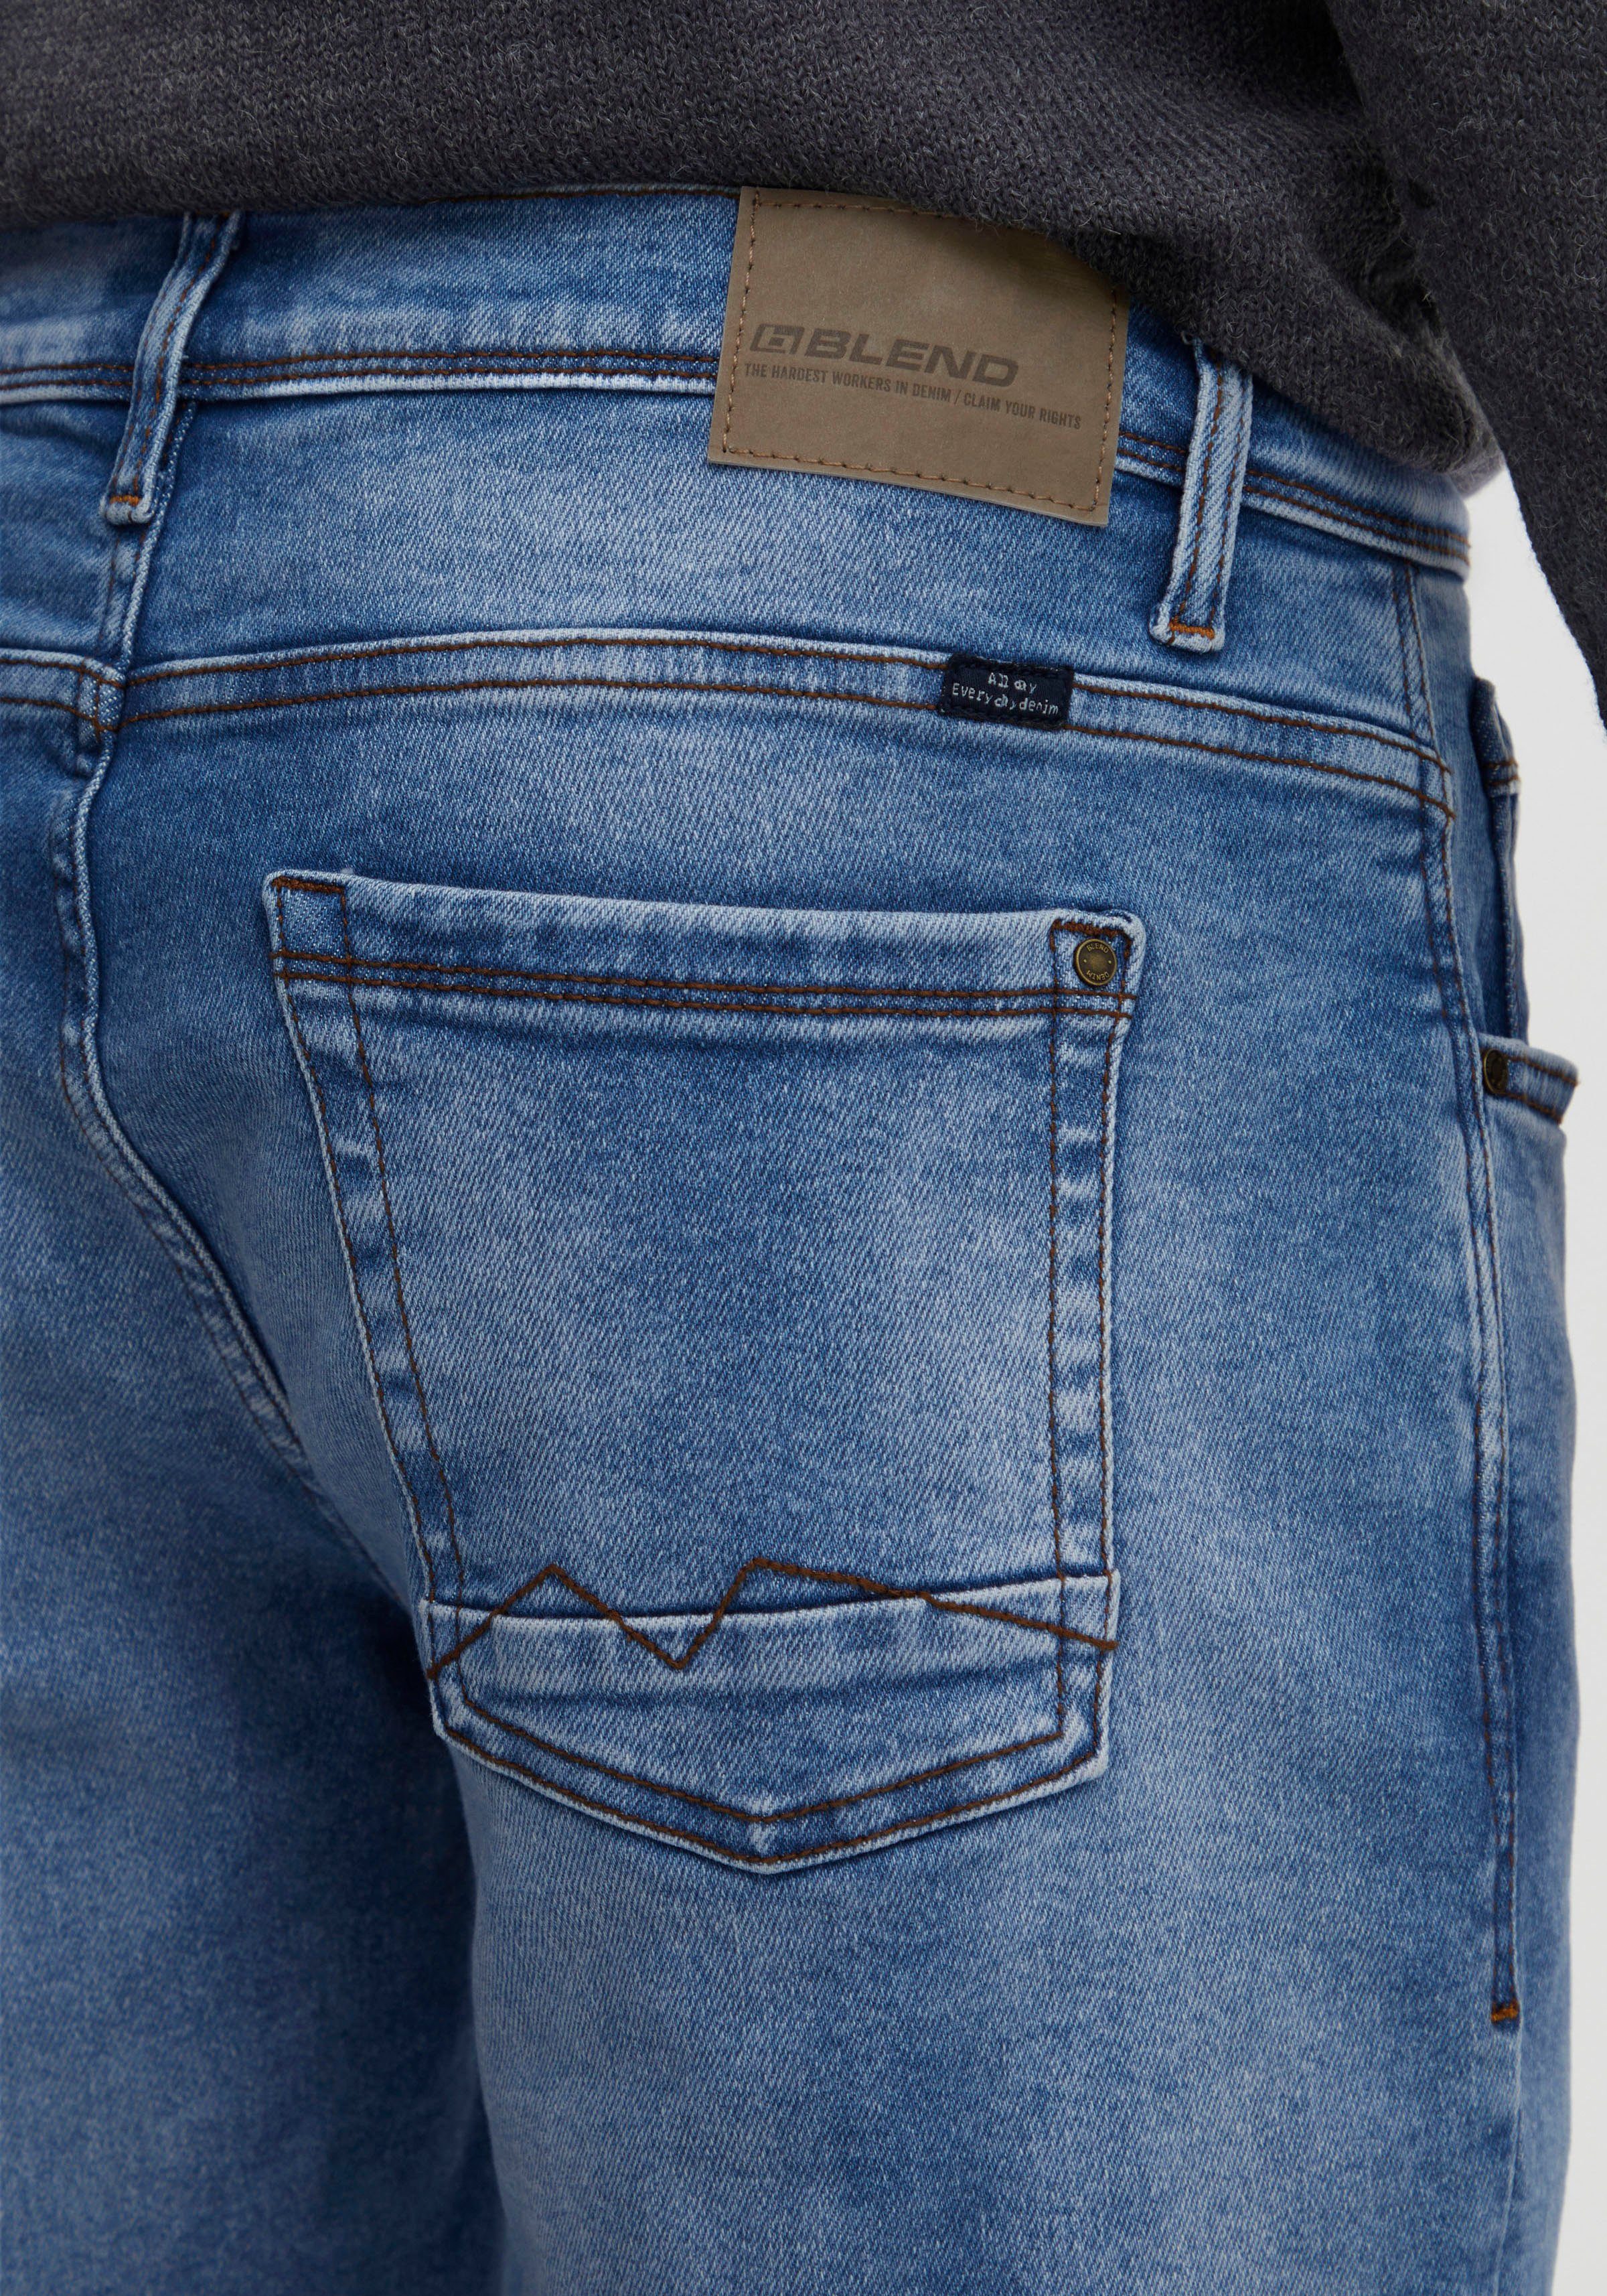 BL Blend Multiflex 5-Pocket-Jeans blue Jeans Blizzard